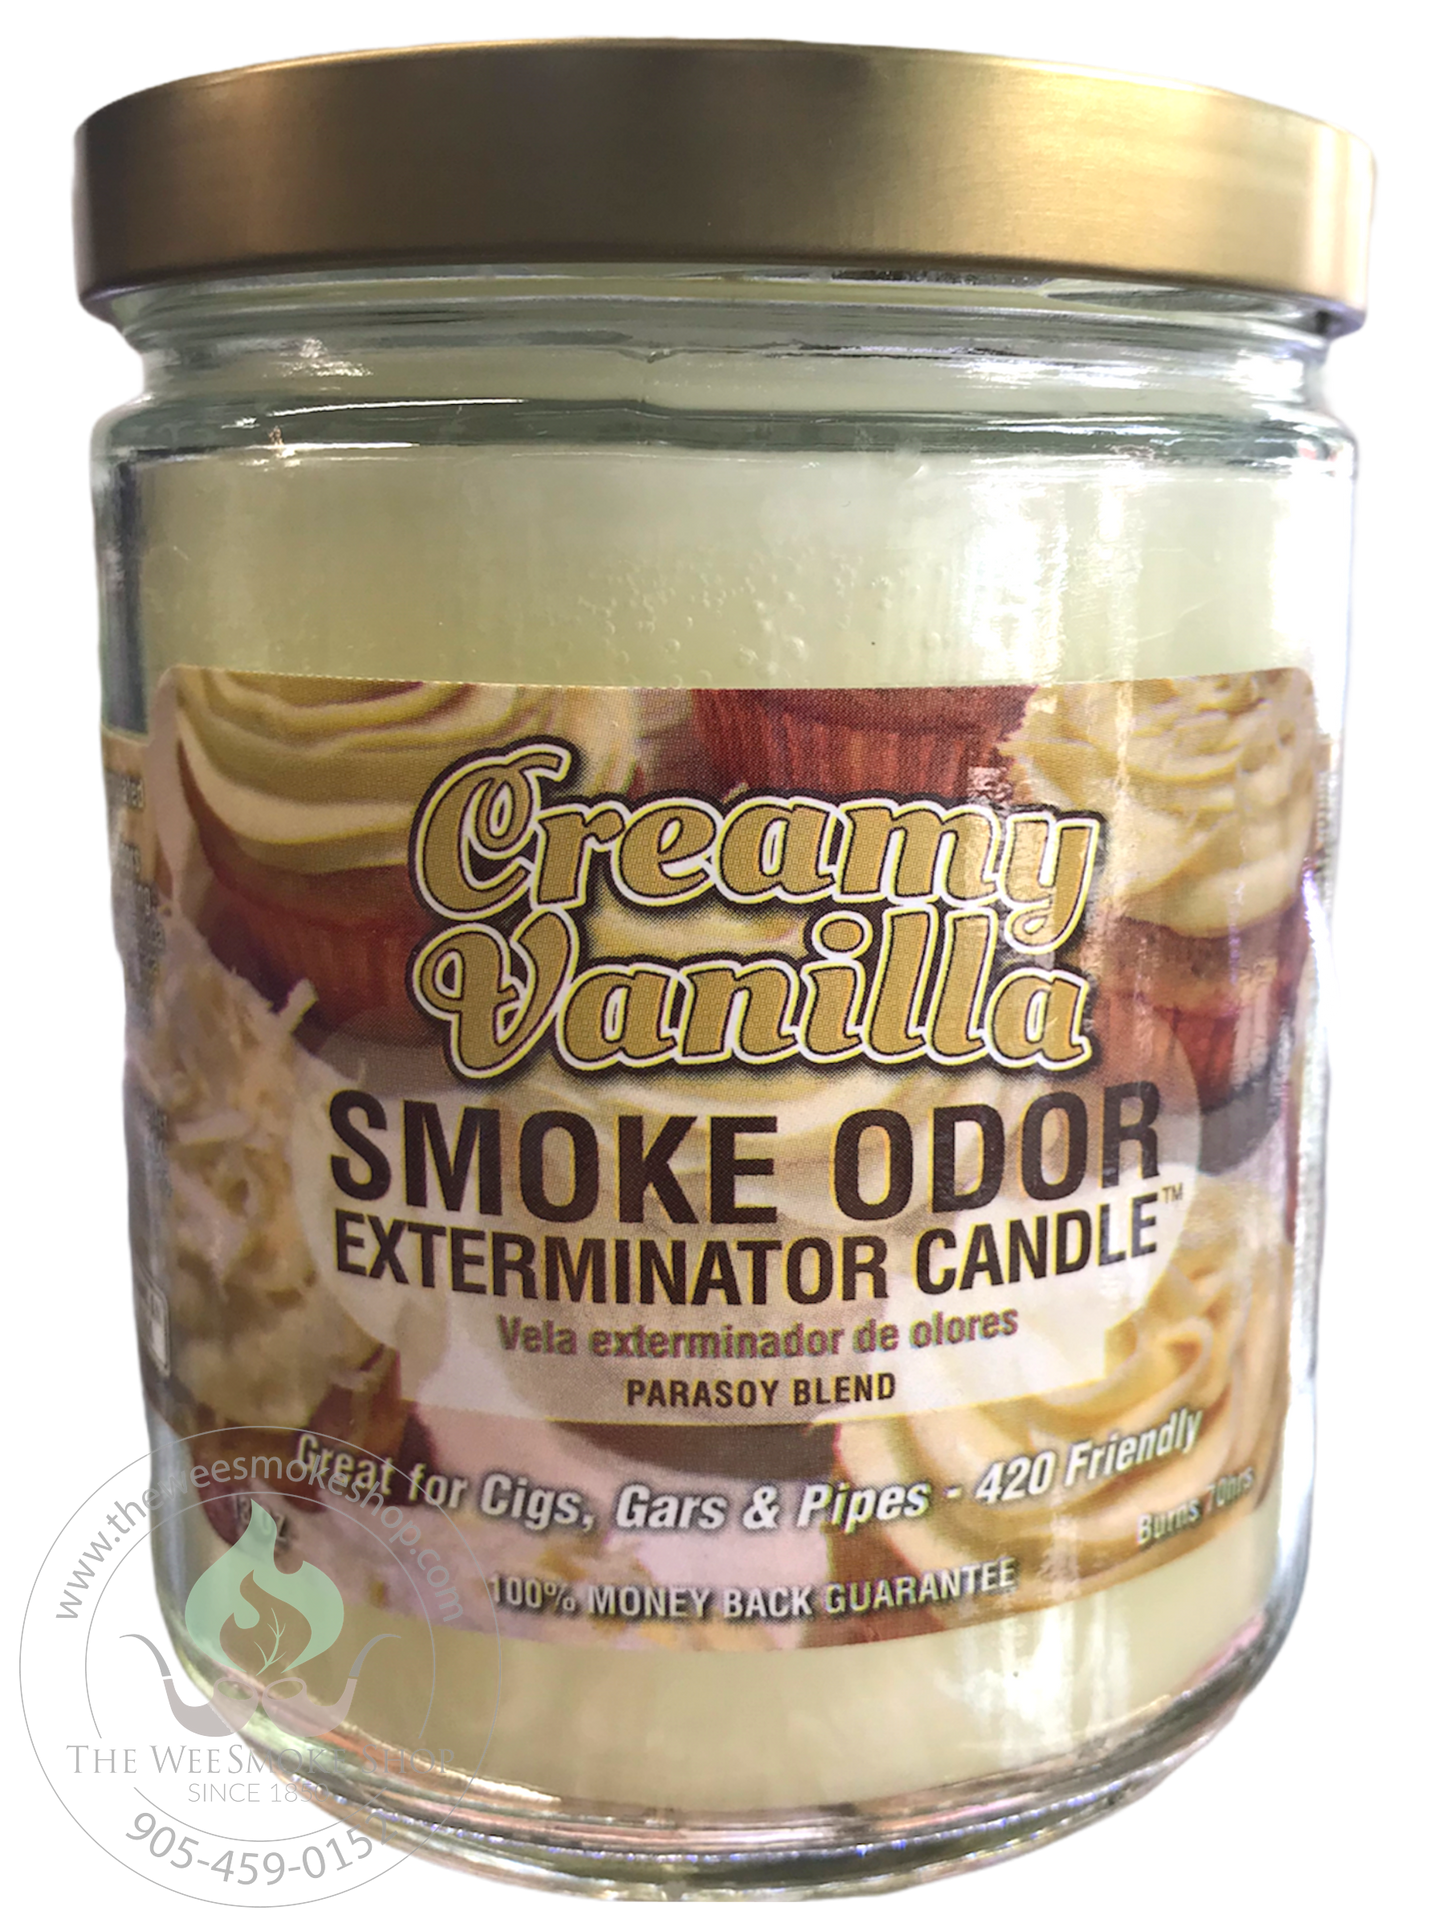 Creamy Vanilla Smoke Odor Exterminator Candle - Wee Smoke Shop